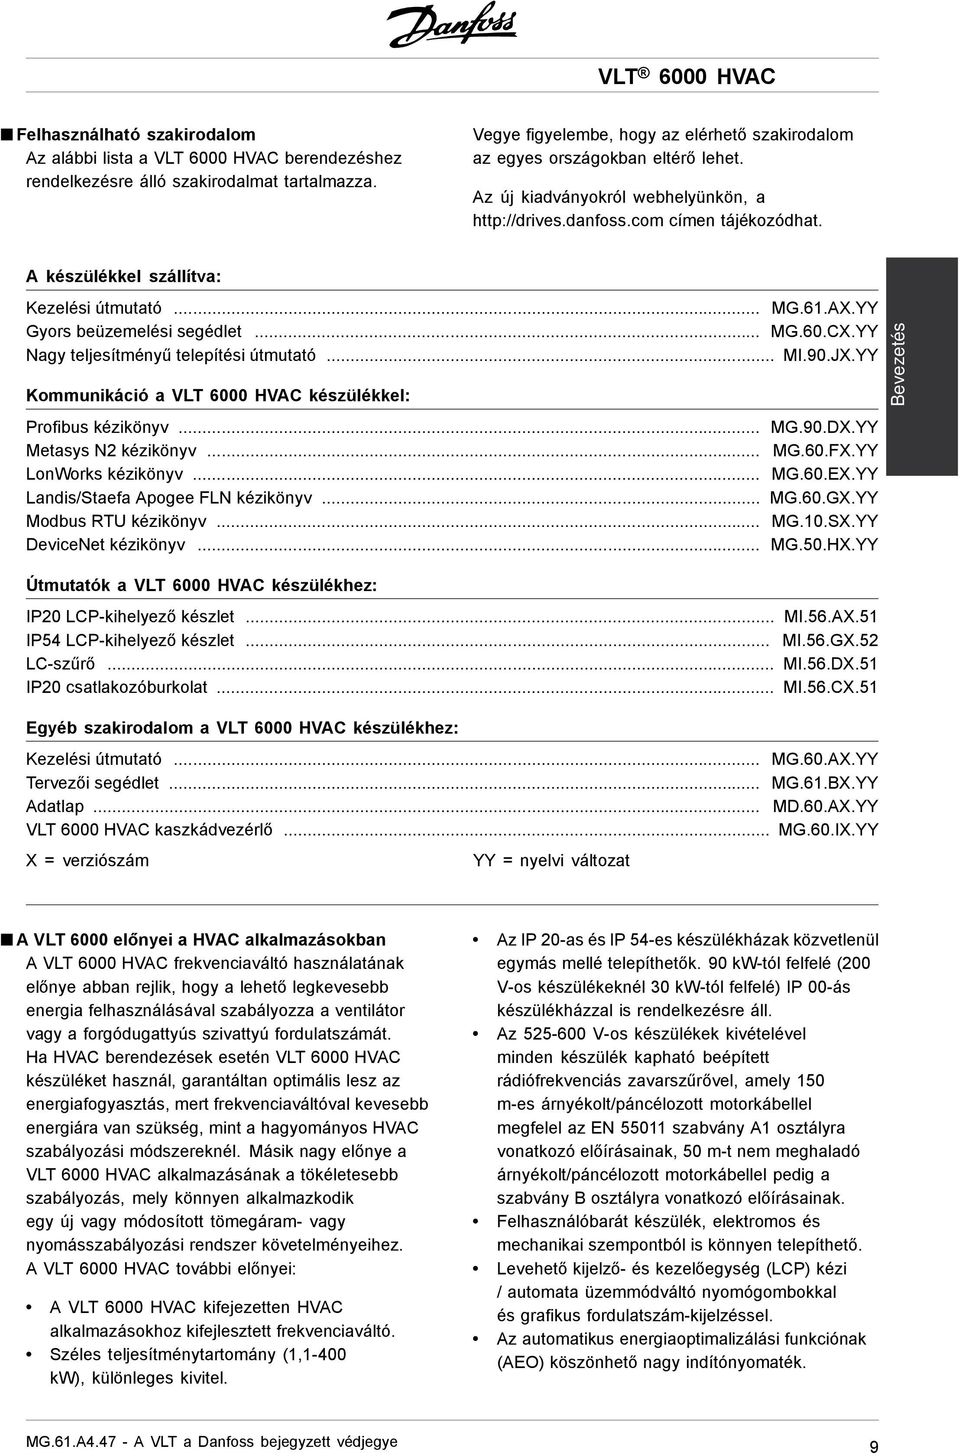 VLT 6000 HVAC. Tartalom - PDF Free Download